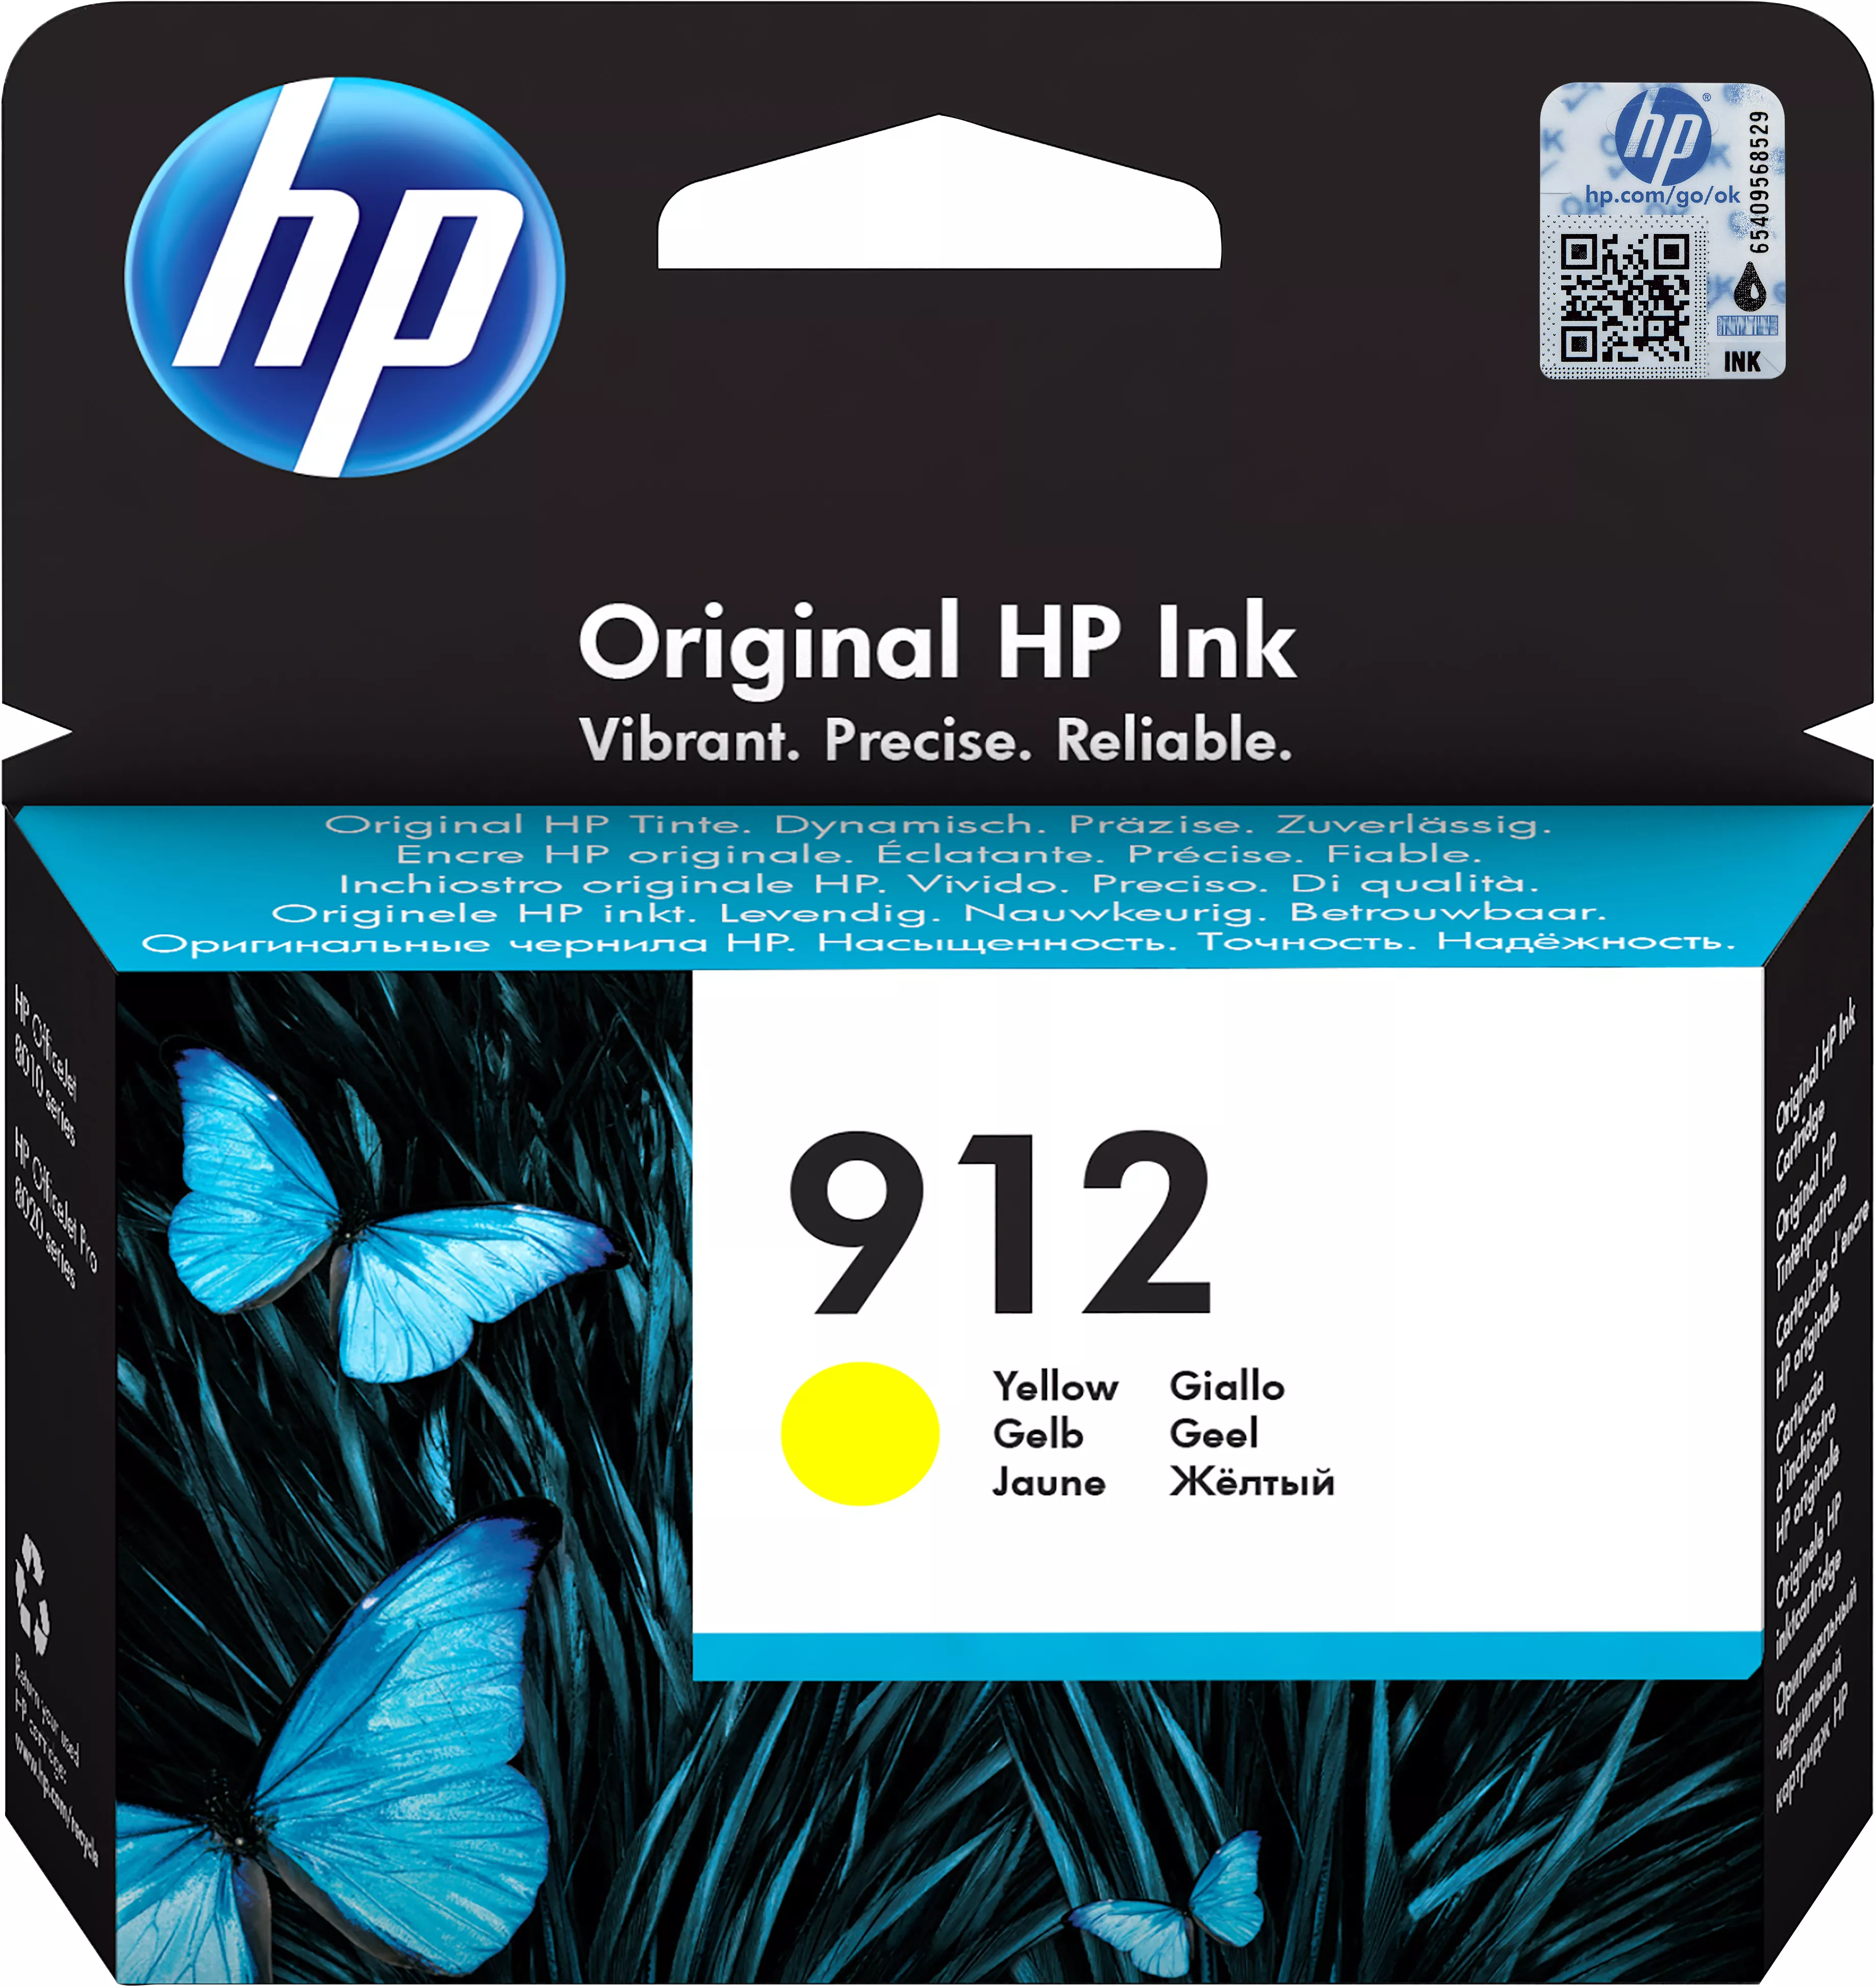 Vente HP 912 Yellow Ink Cartridge au meilleur prix